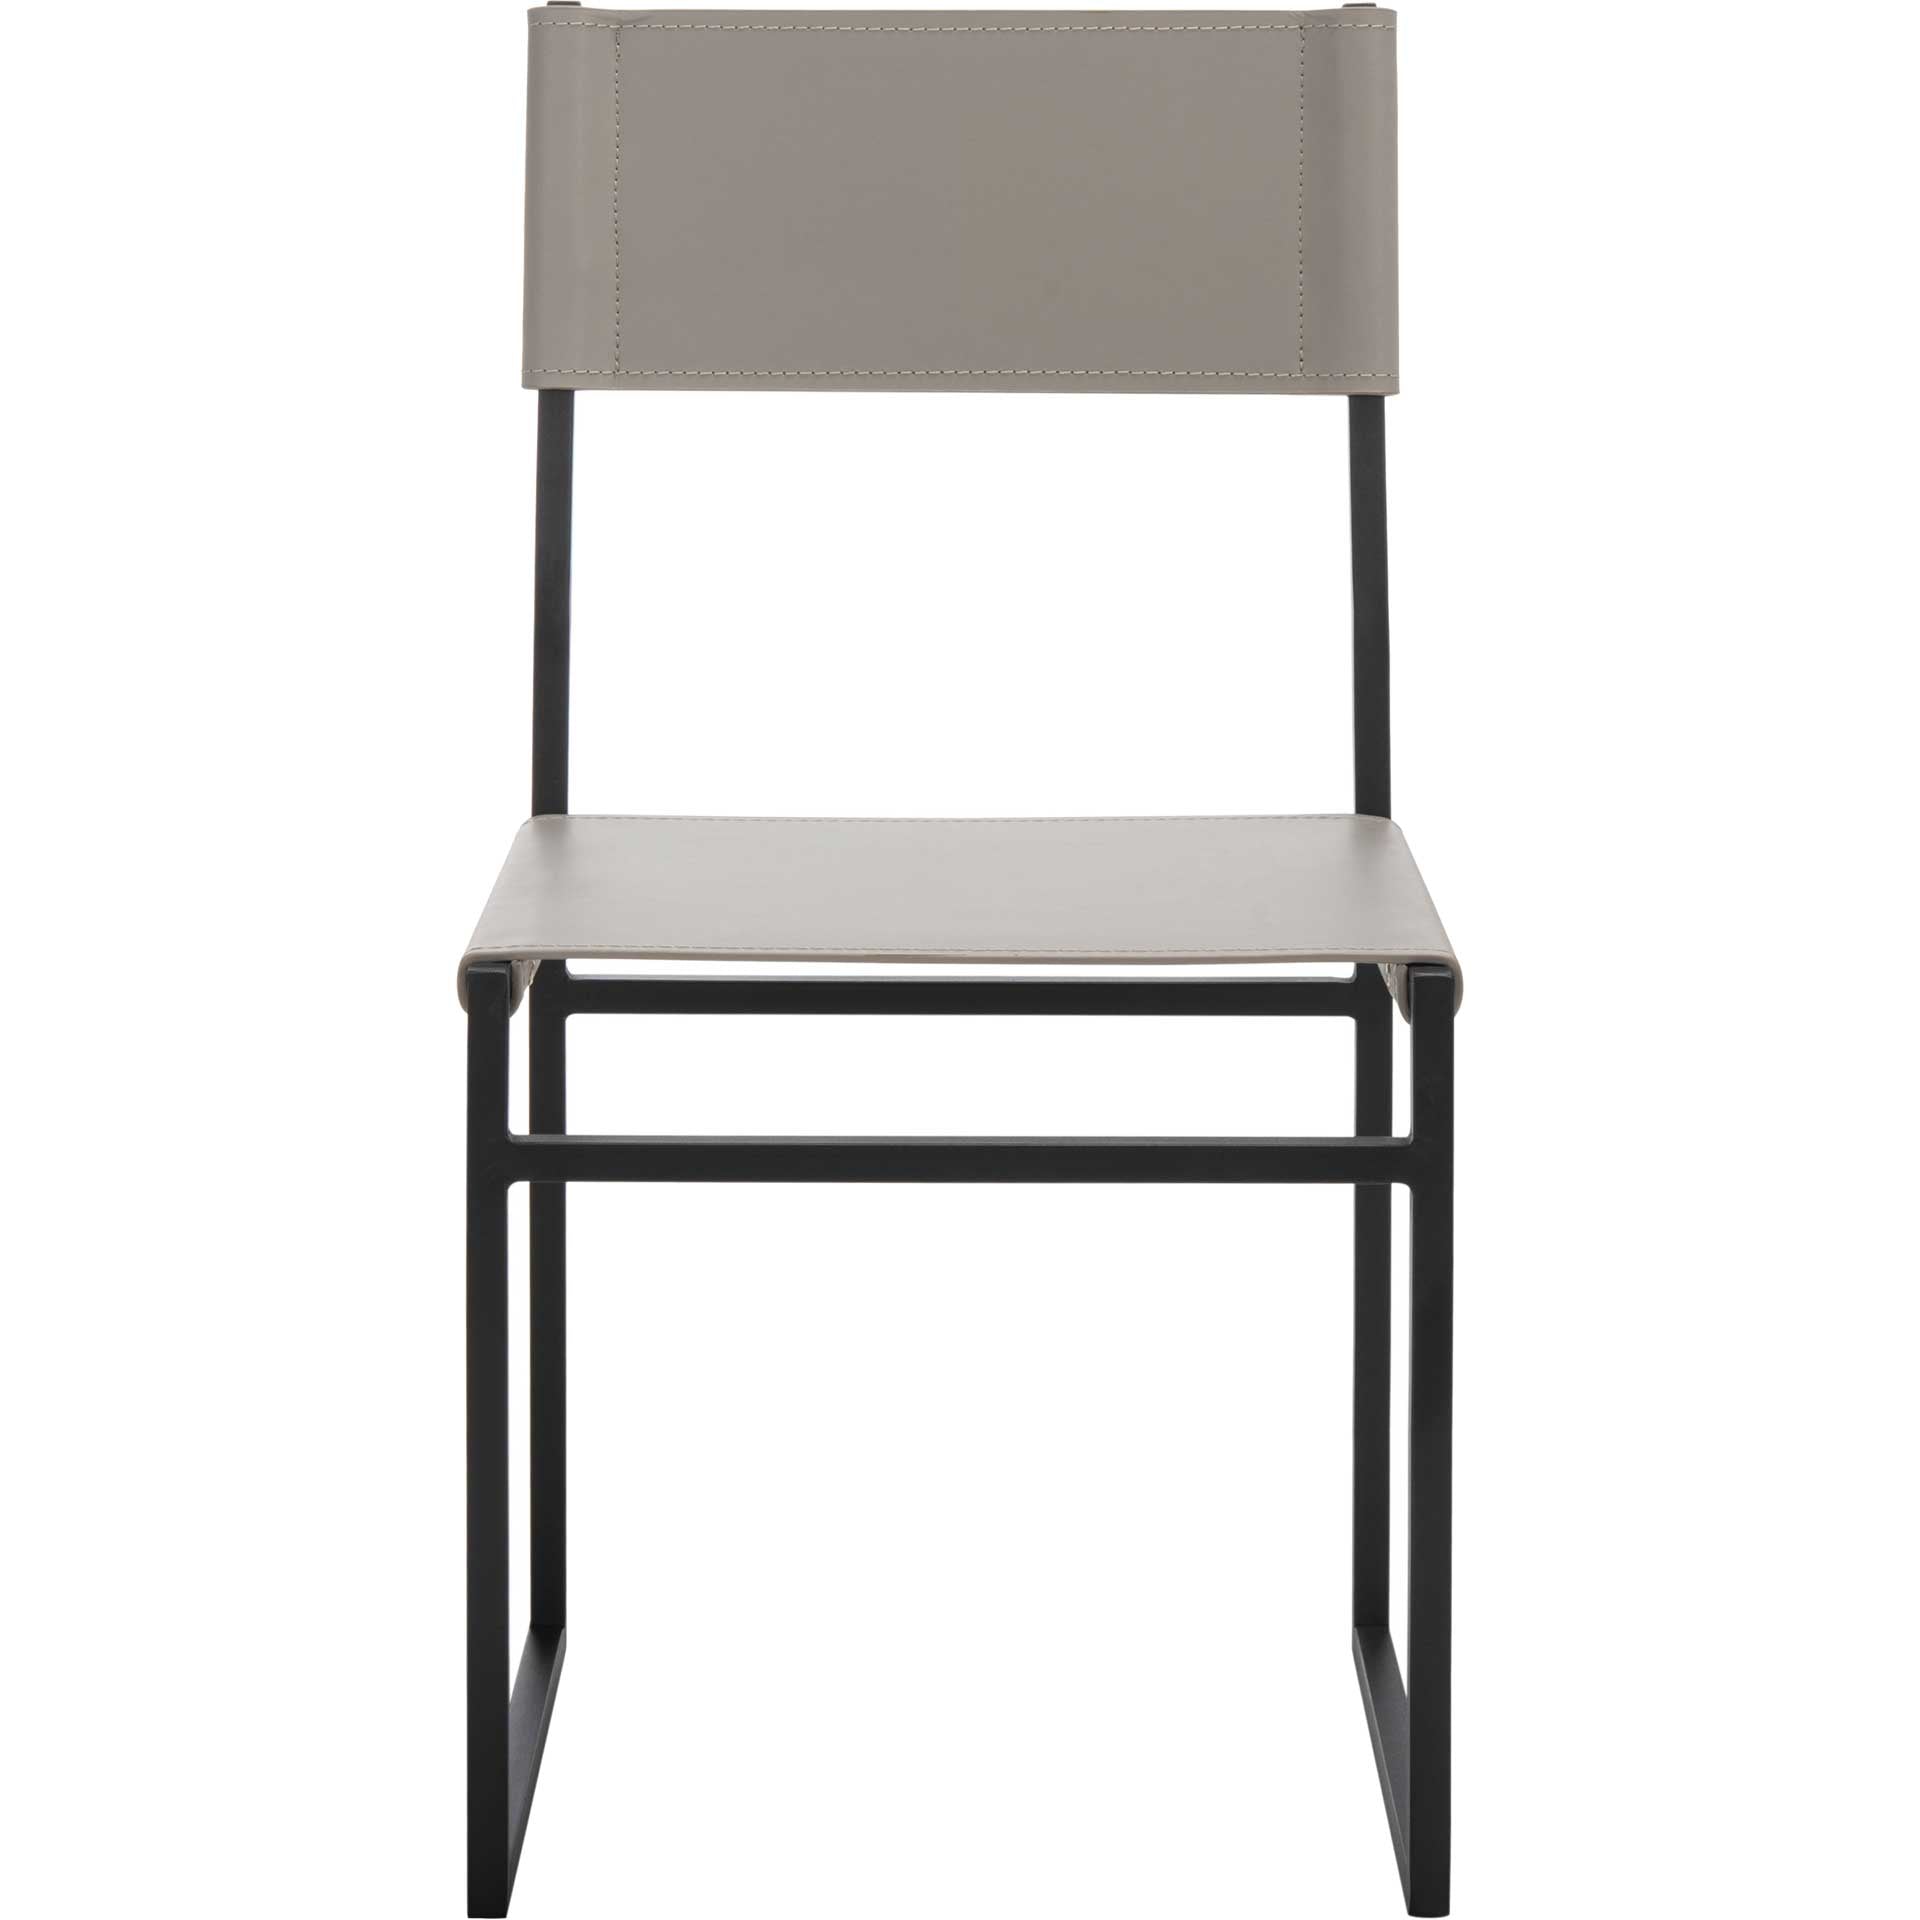 Landry Dining Chairs Light Gray/Black (Set of 2)